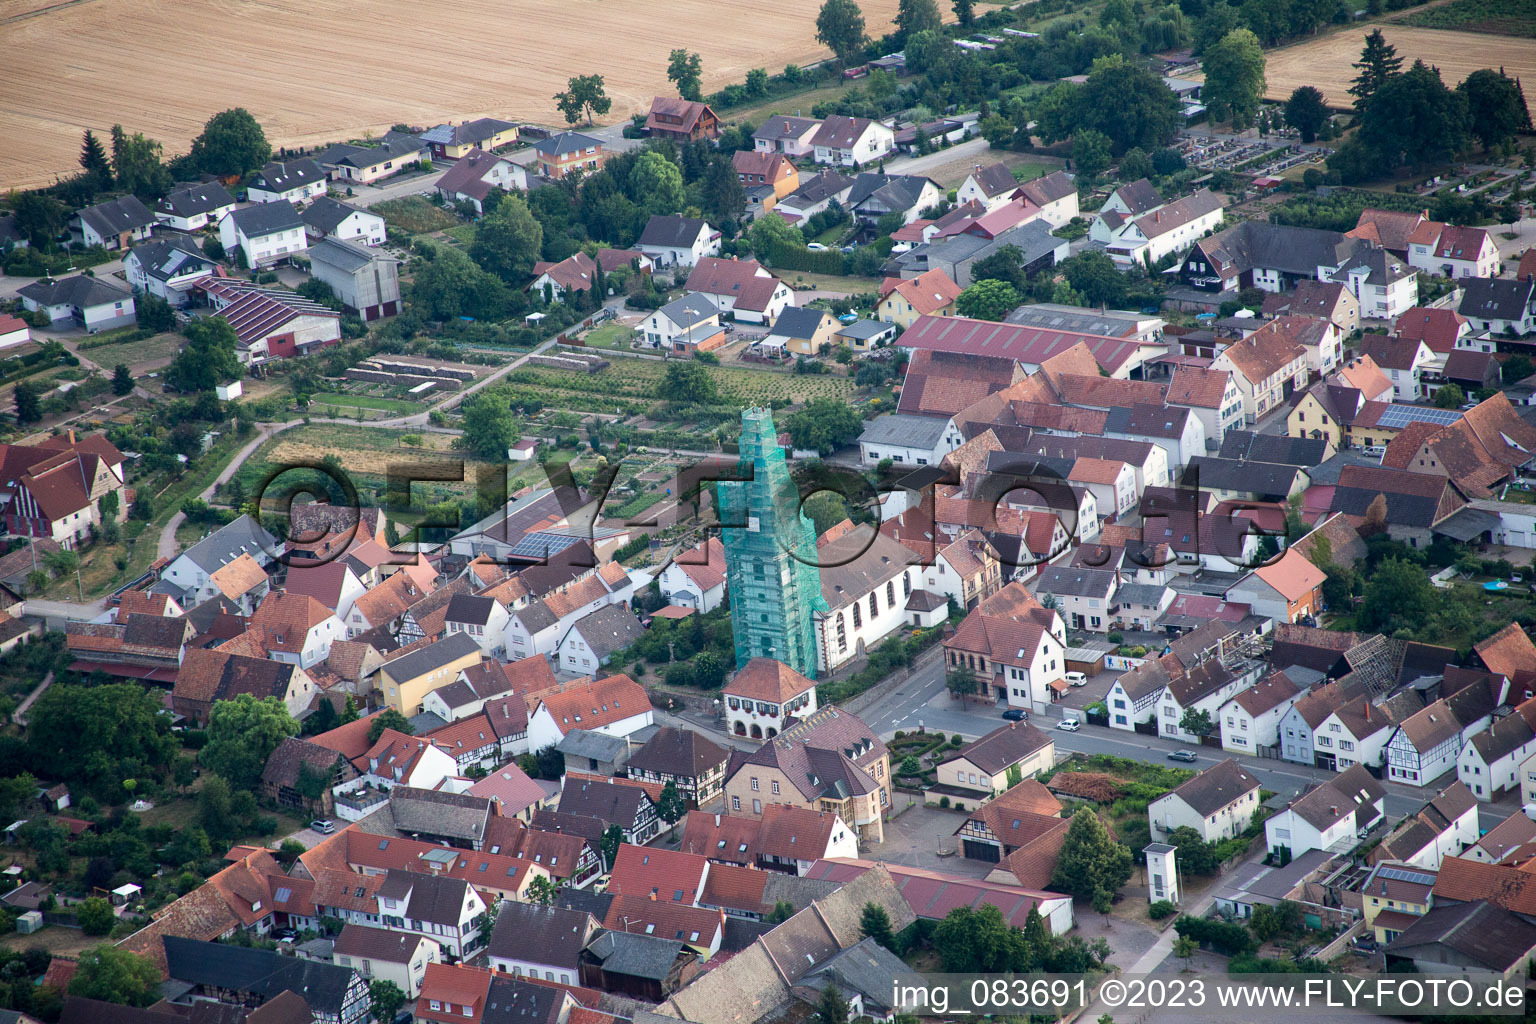 Aerial photograpy of Ottersheim, Catholic church scaffolded by Leidner GmbH Gerüstbau, Landau in Ottersheim bei Landau in the state Rhineland-Palatinate, Germany